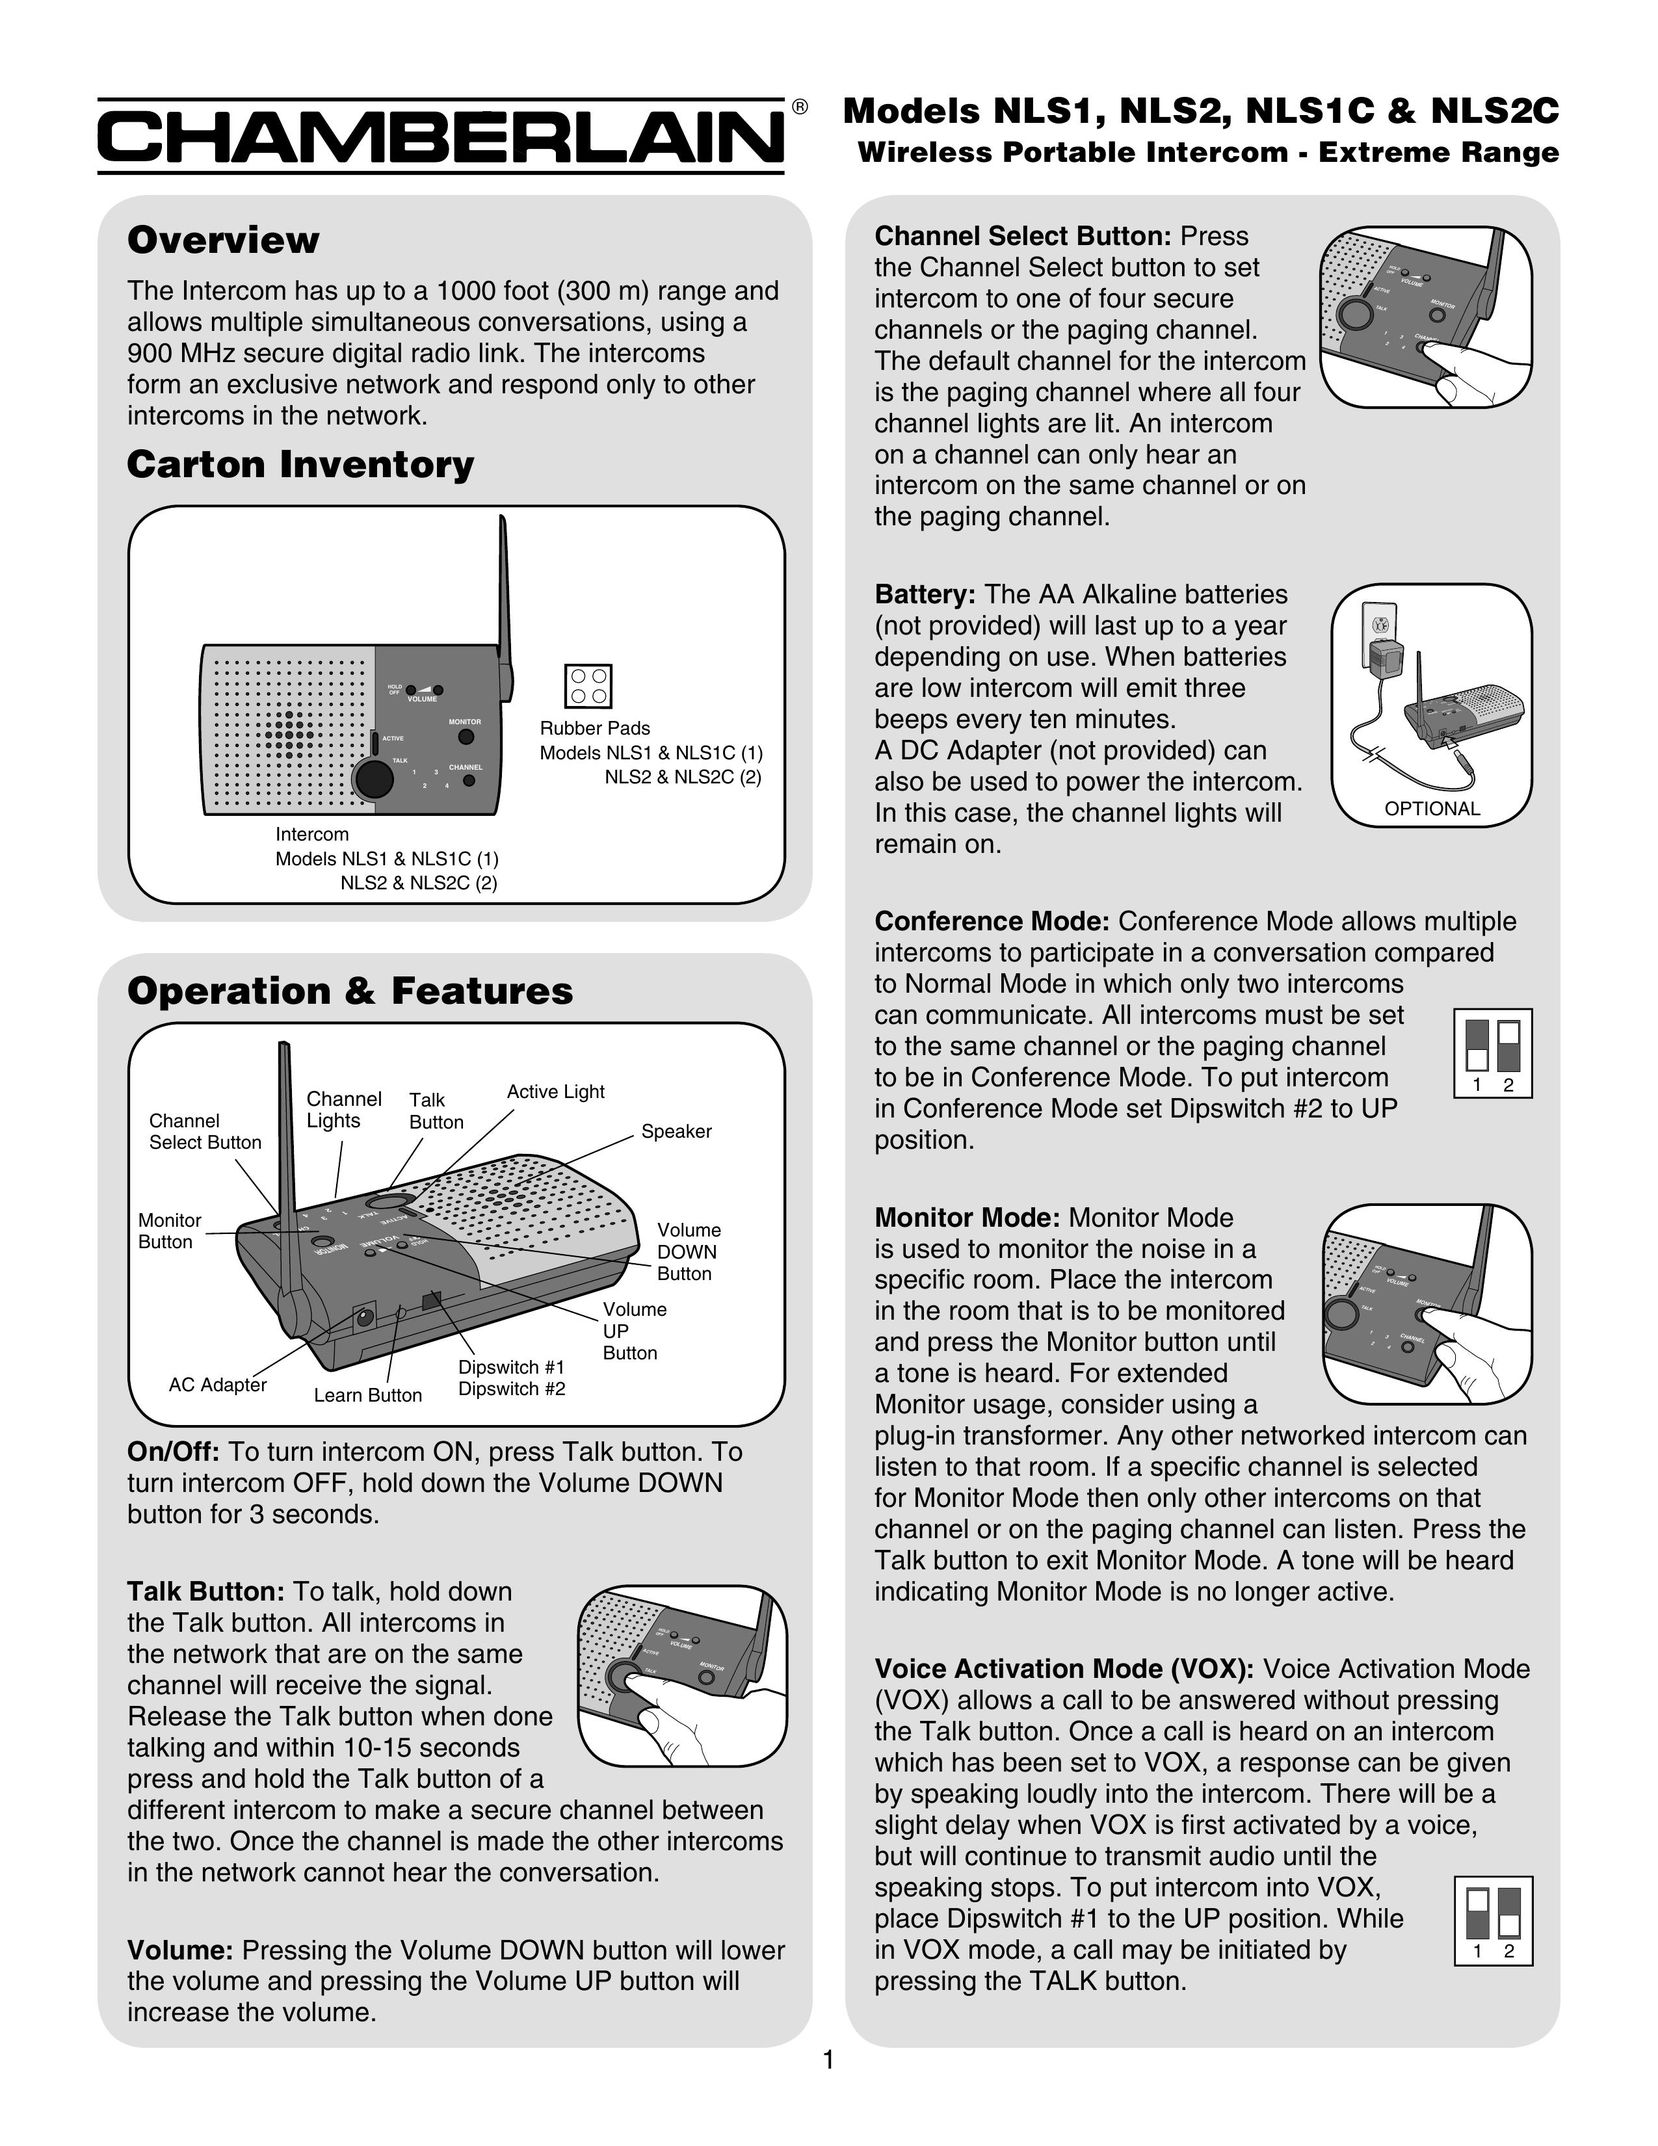 Chamberlain NLS1 Intercom System User Manual